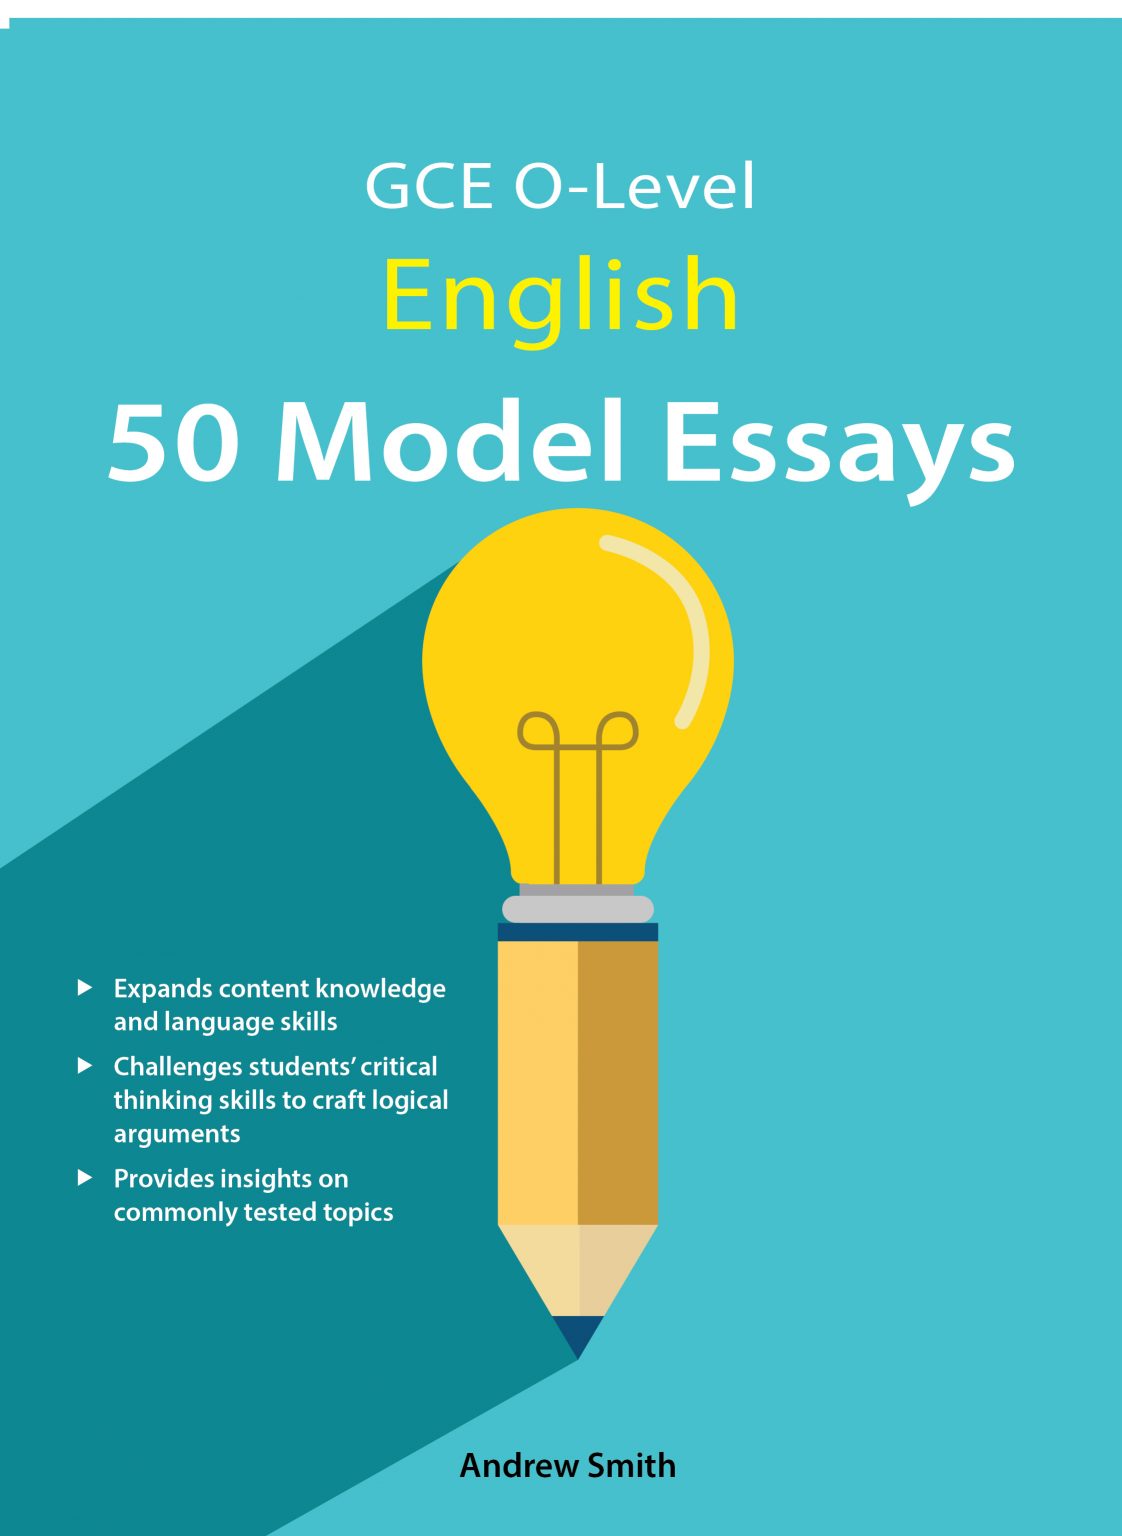 50 model essays